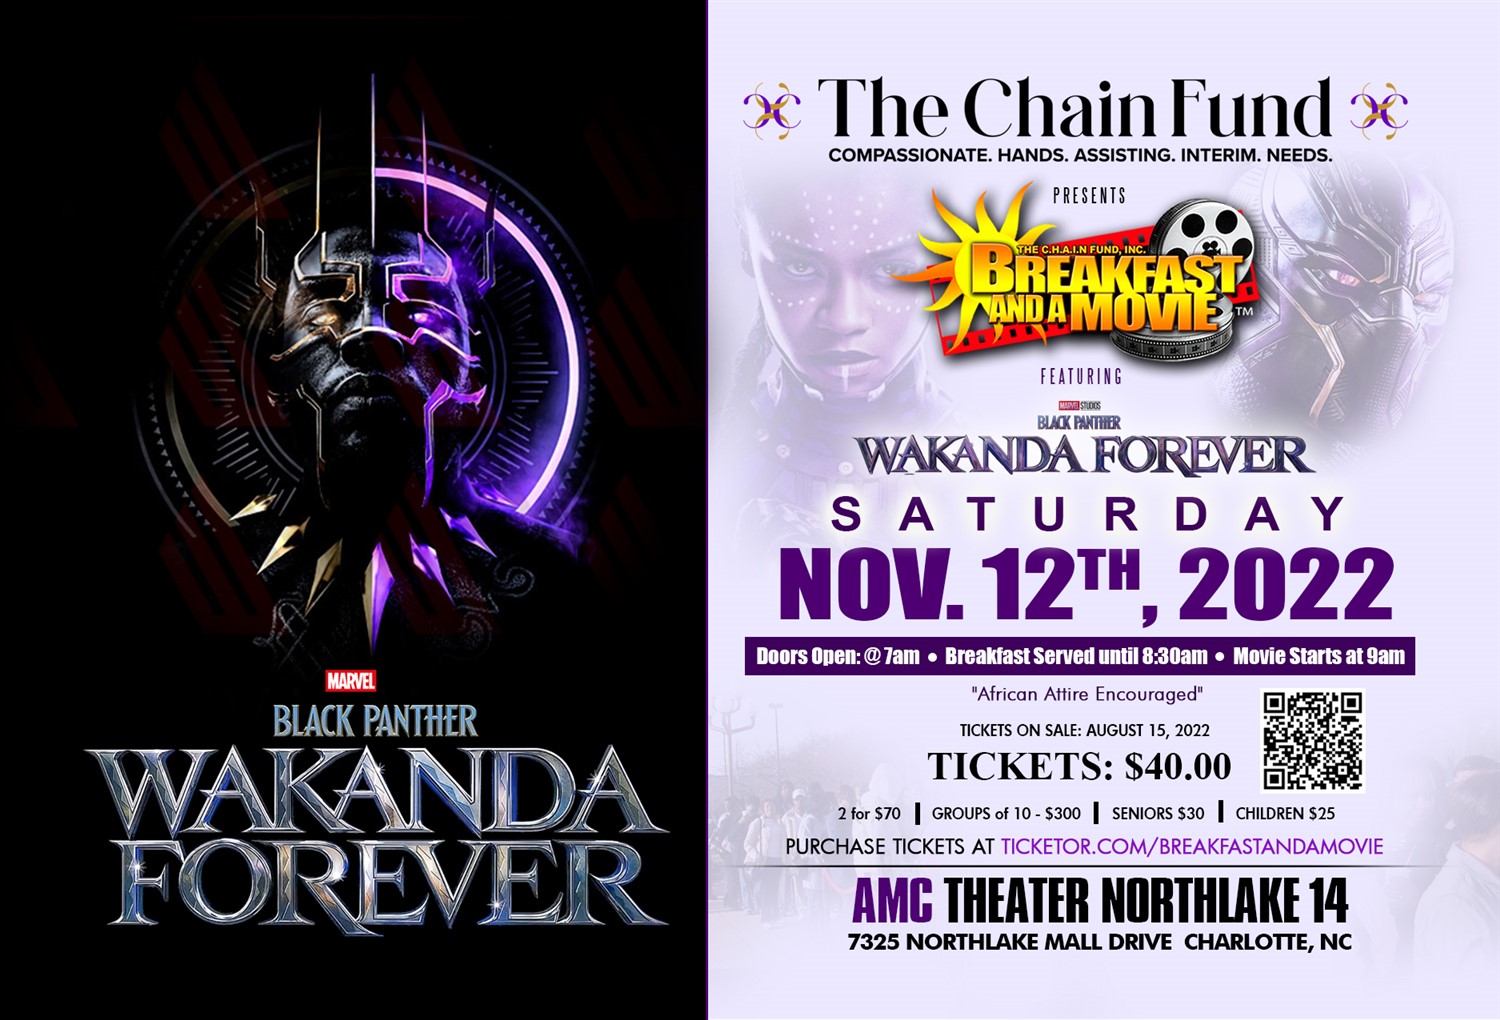 The Chain Fund's Breakfast and A Movie(TM) Featuring: Wakanda Forever on Nov 12, 08:00@Cinergy Dine In Cinemas - Compra entradas y obtén información entcfundinc.org 